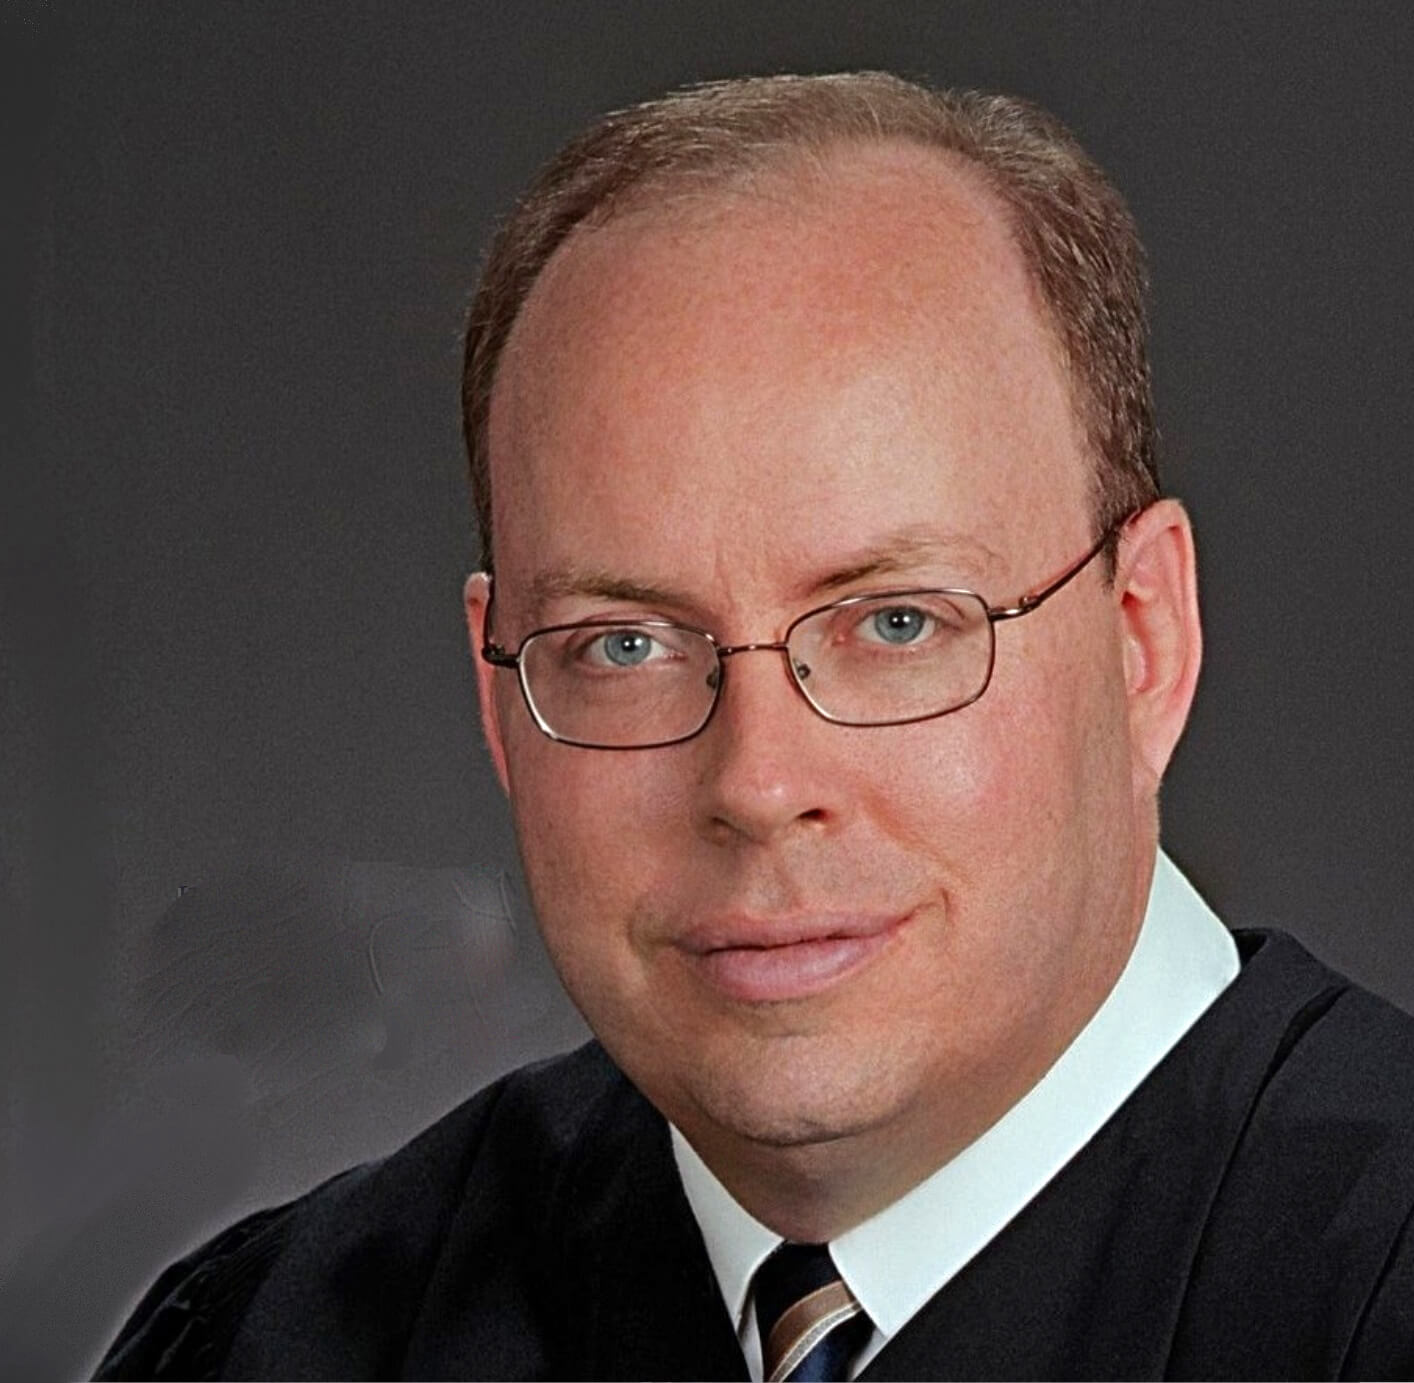 Judge Martin Hoffman